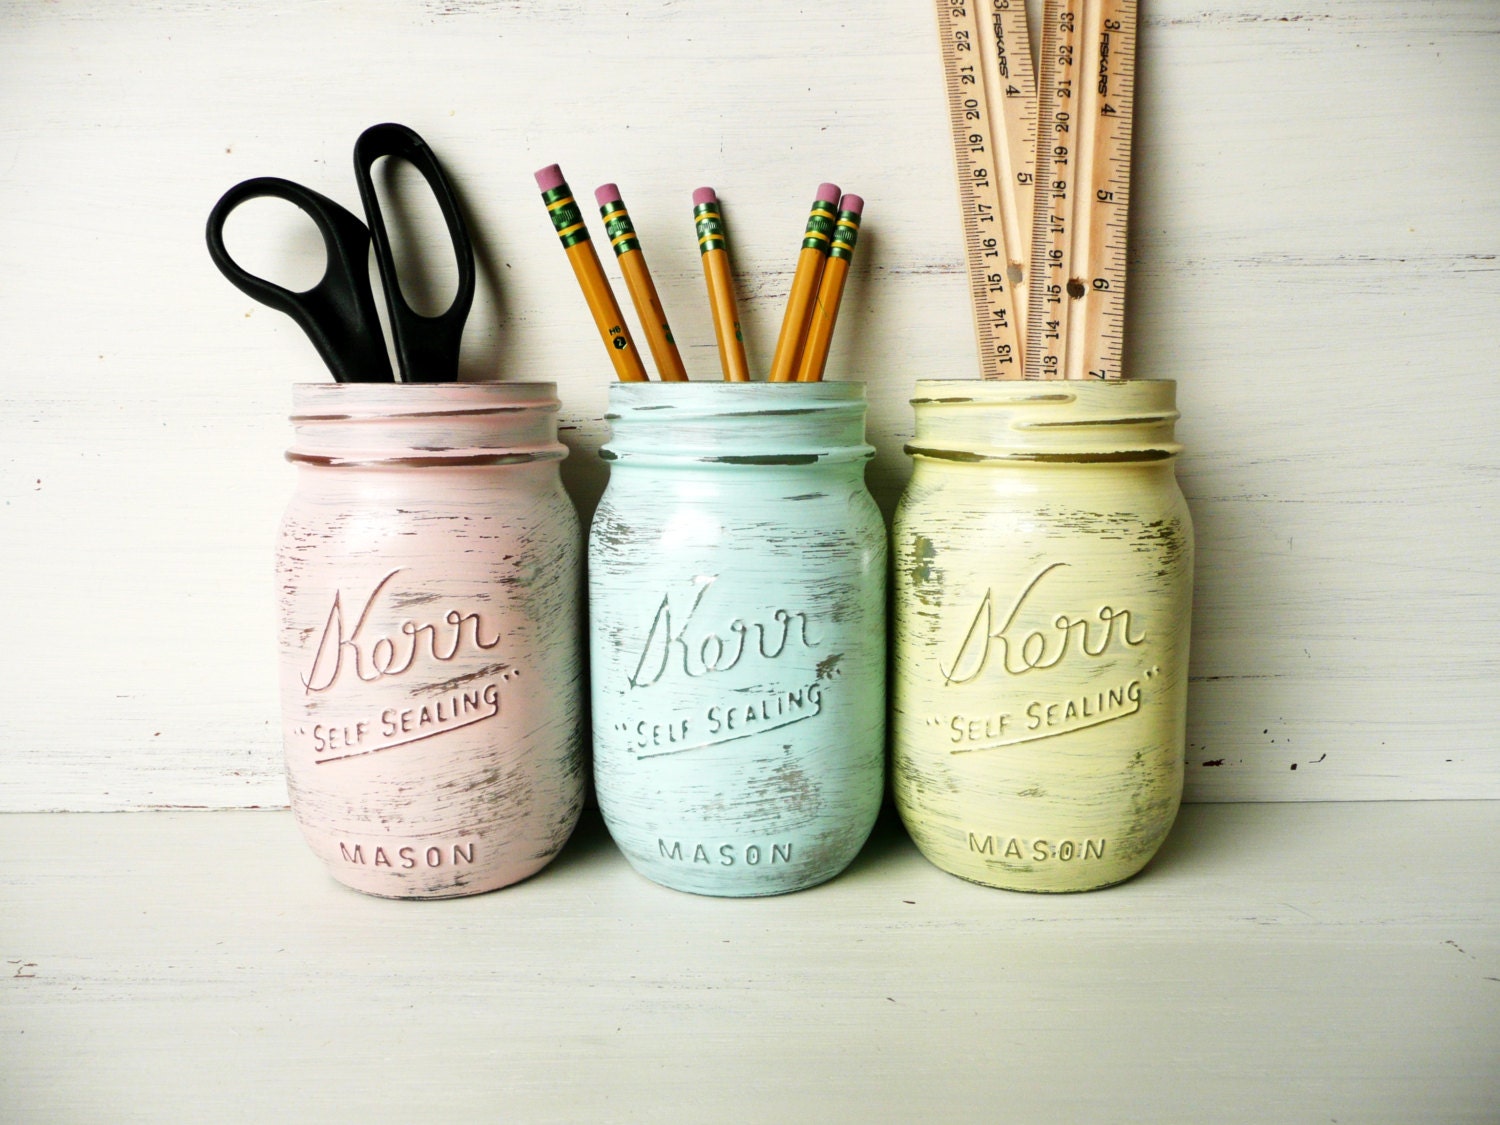 Pastel Glam - Home, Dorm or Office Decor - Painted Mason Jar - Silver Inside - Vase - BeachBlues